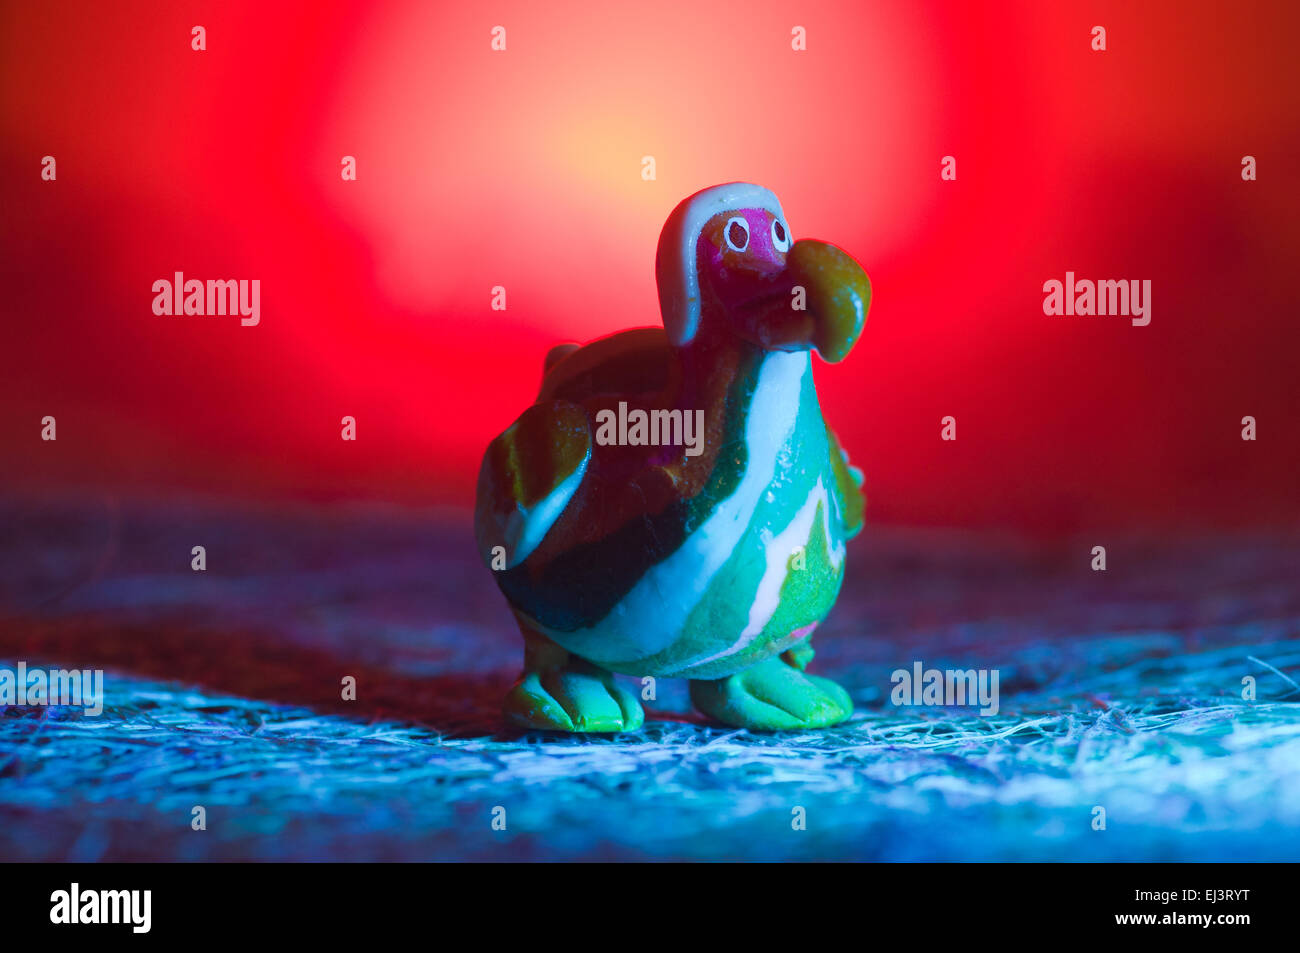 Small stone figure of a Mauritian dodo bird in studio setting Stock Photo